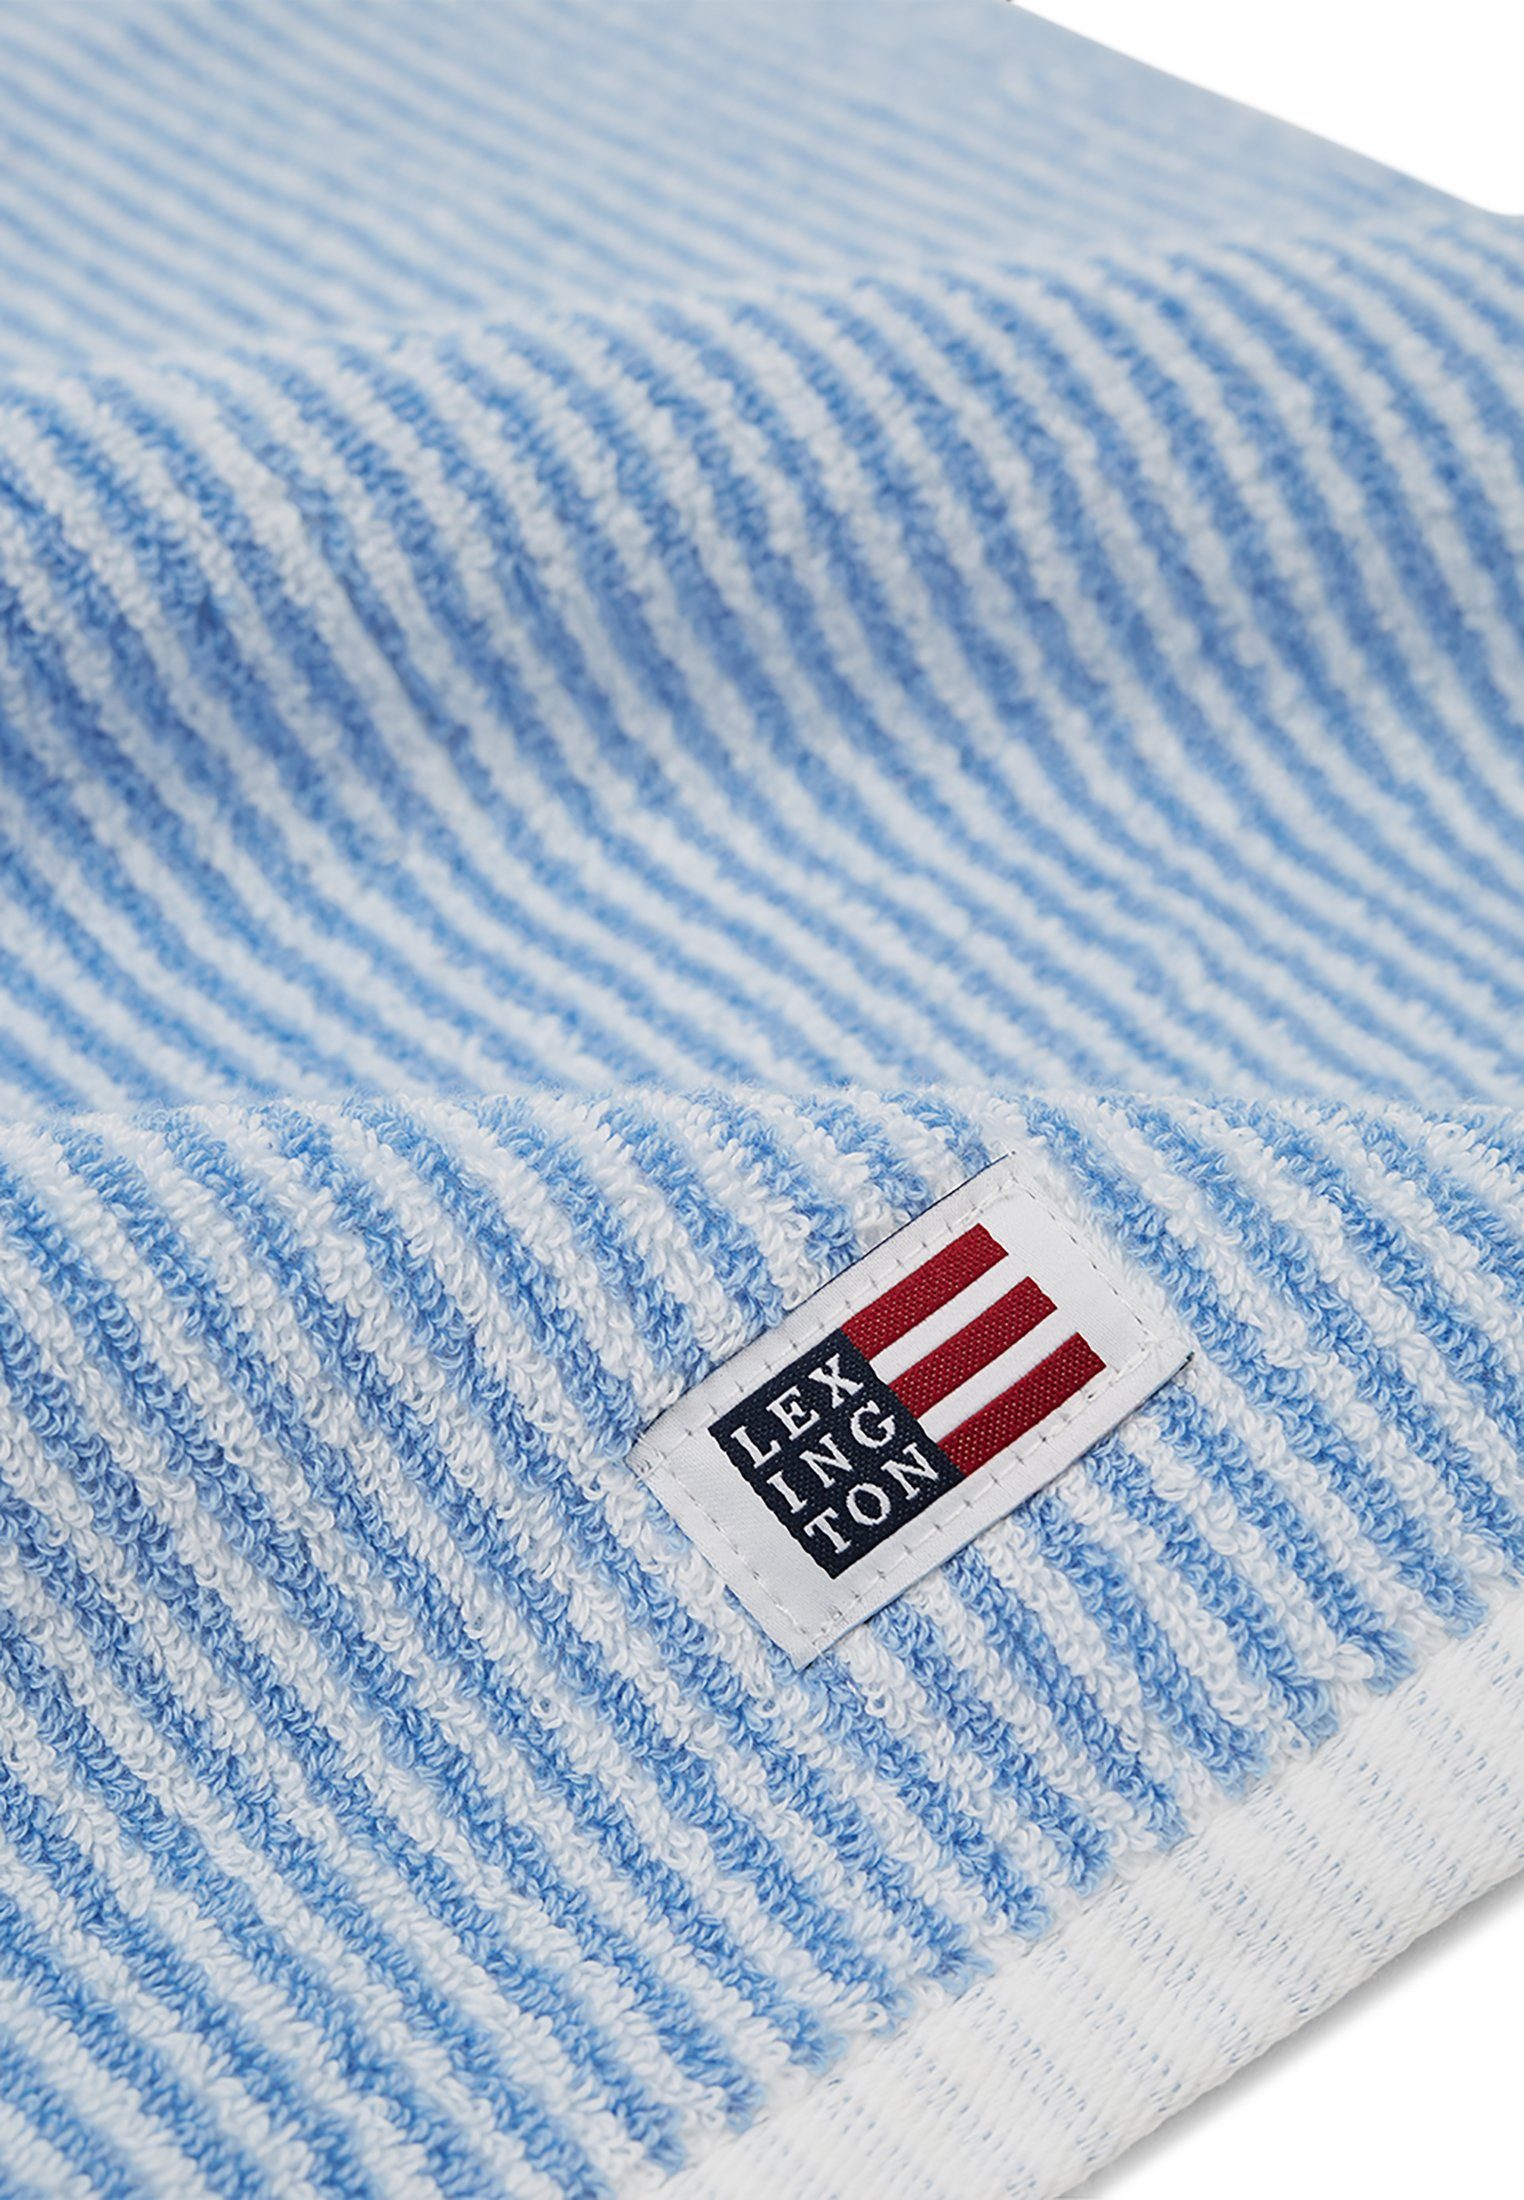 Original white/blue Lexington Handtuch Towel